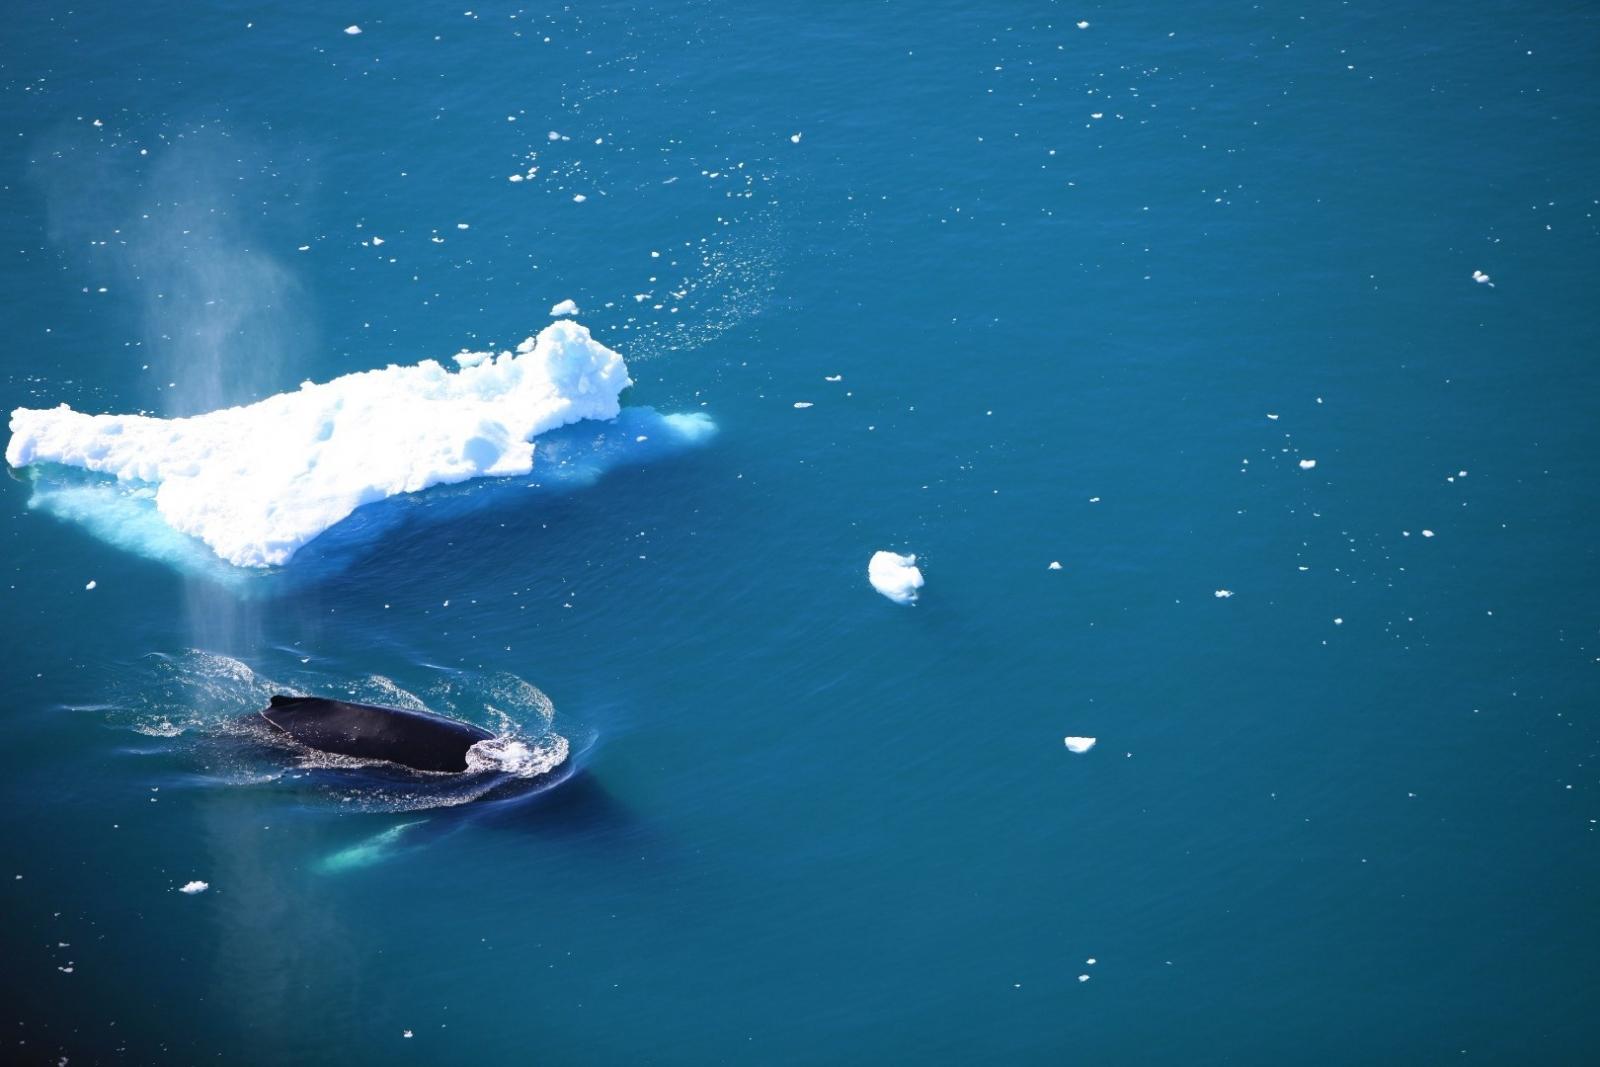 Whale near the iceberg. Photo by Anne Mette Christiansen